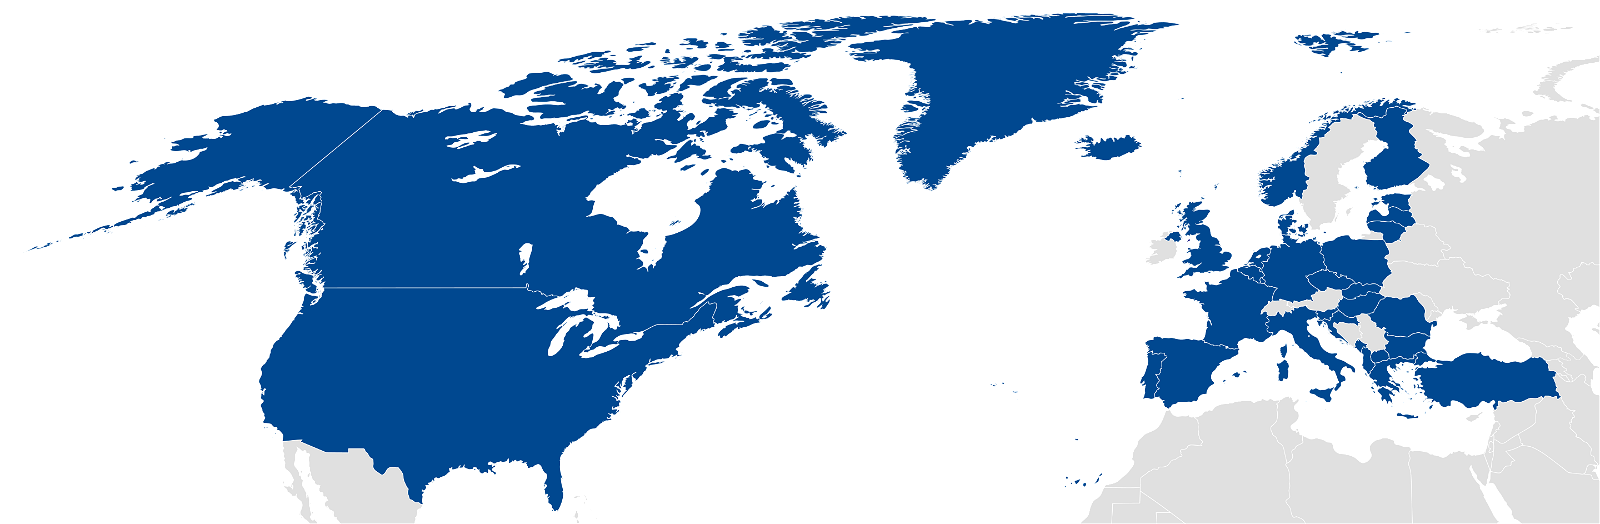 North Atlantic Treaty Organization (NATO) Members